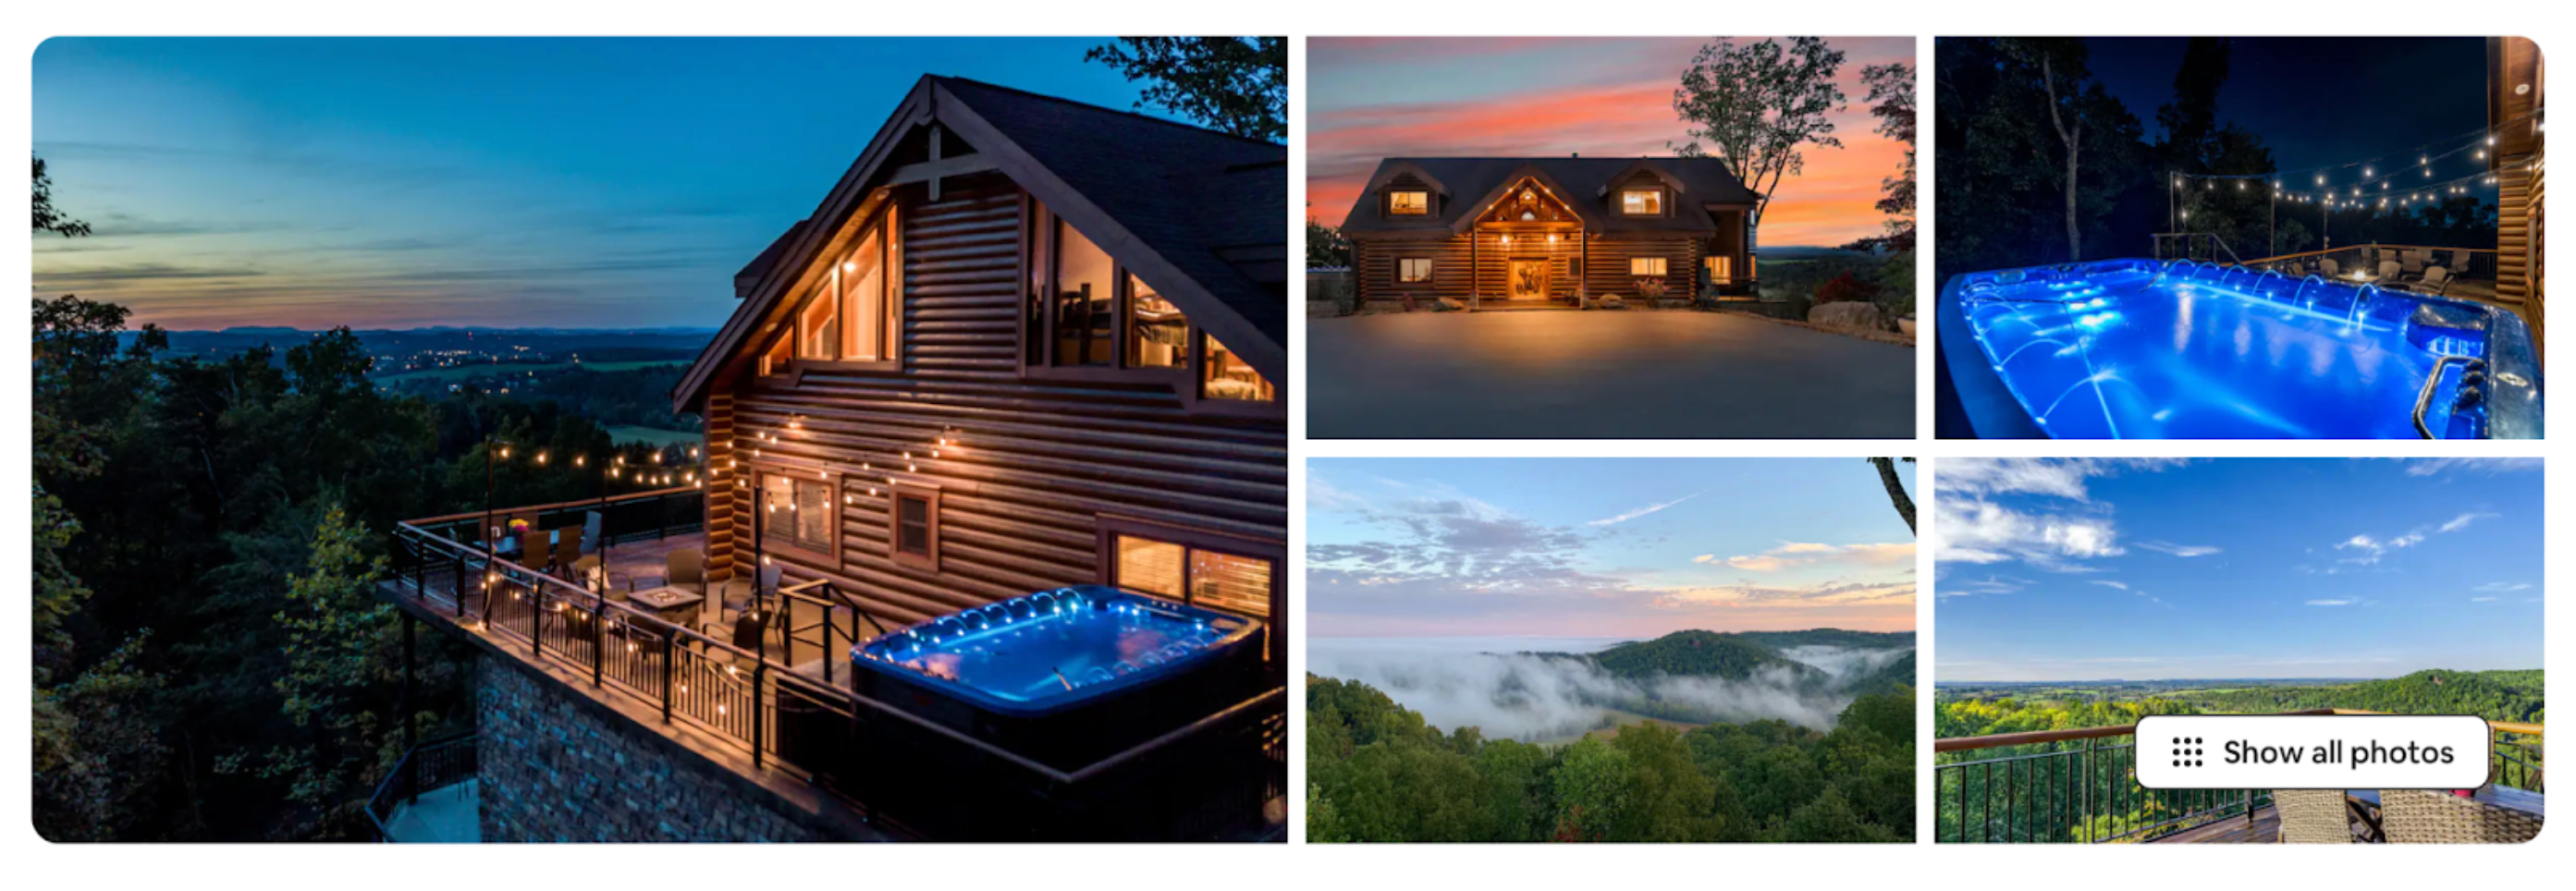 Tanglewood Mountain Lodge - Smoky Mountain Rental Cabin